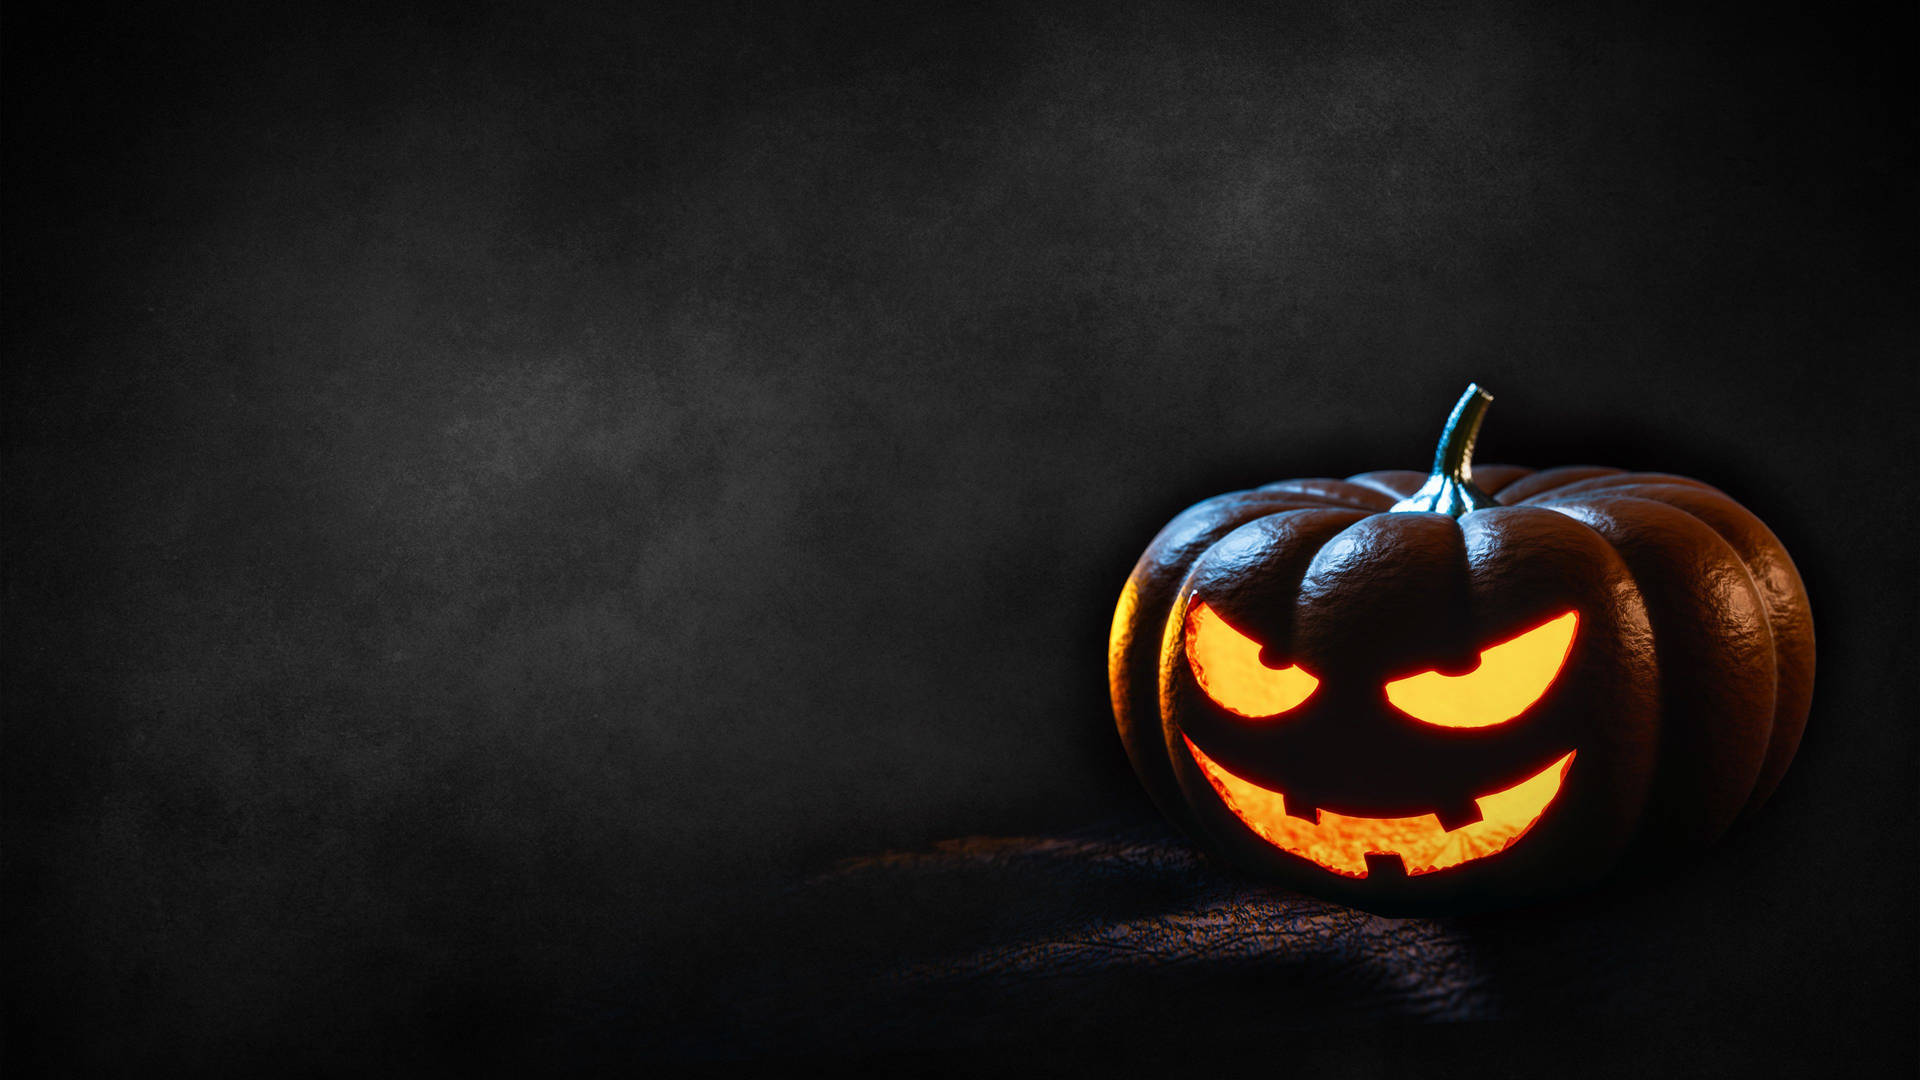 Dark Halloween Jack-o'-lantern